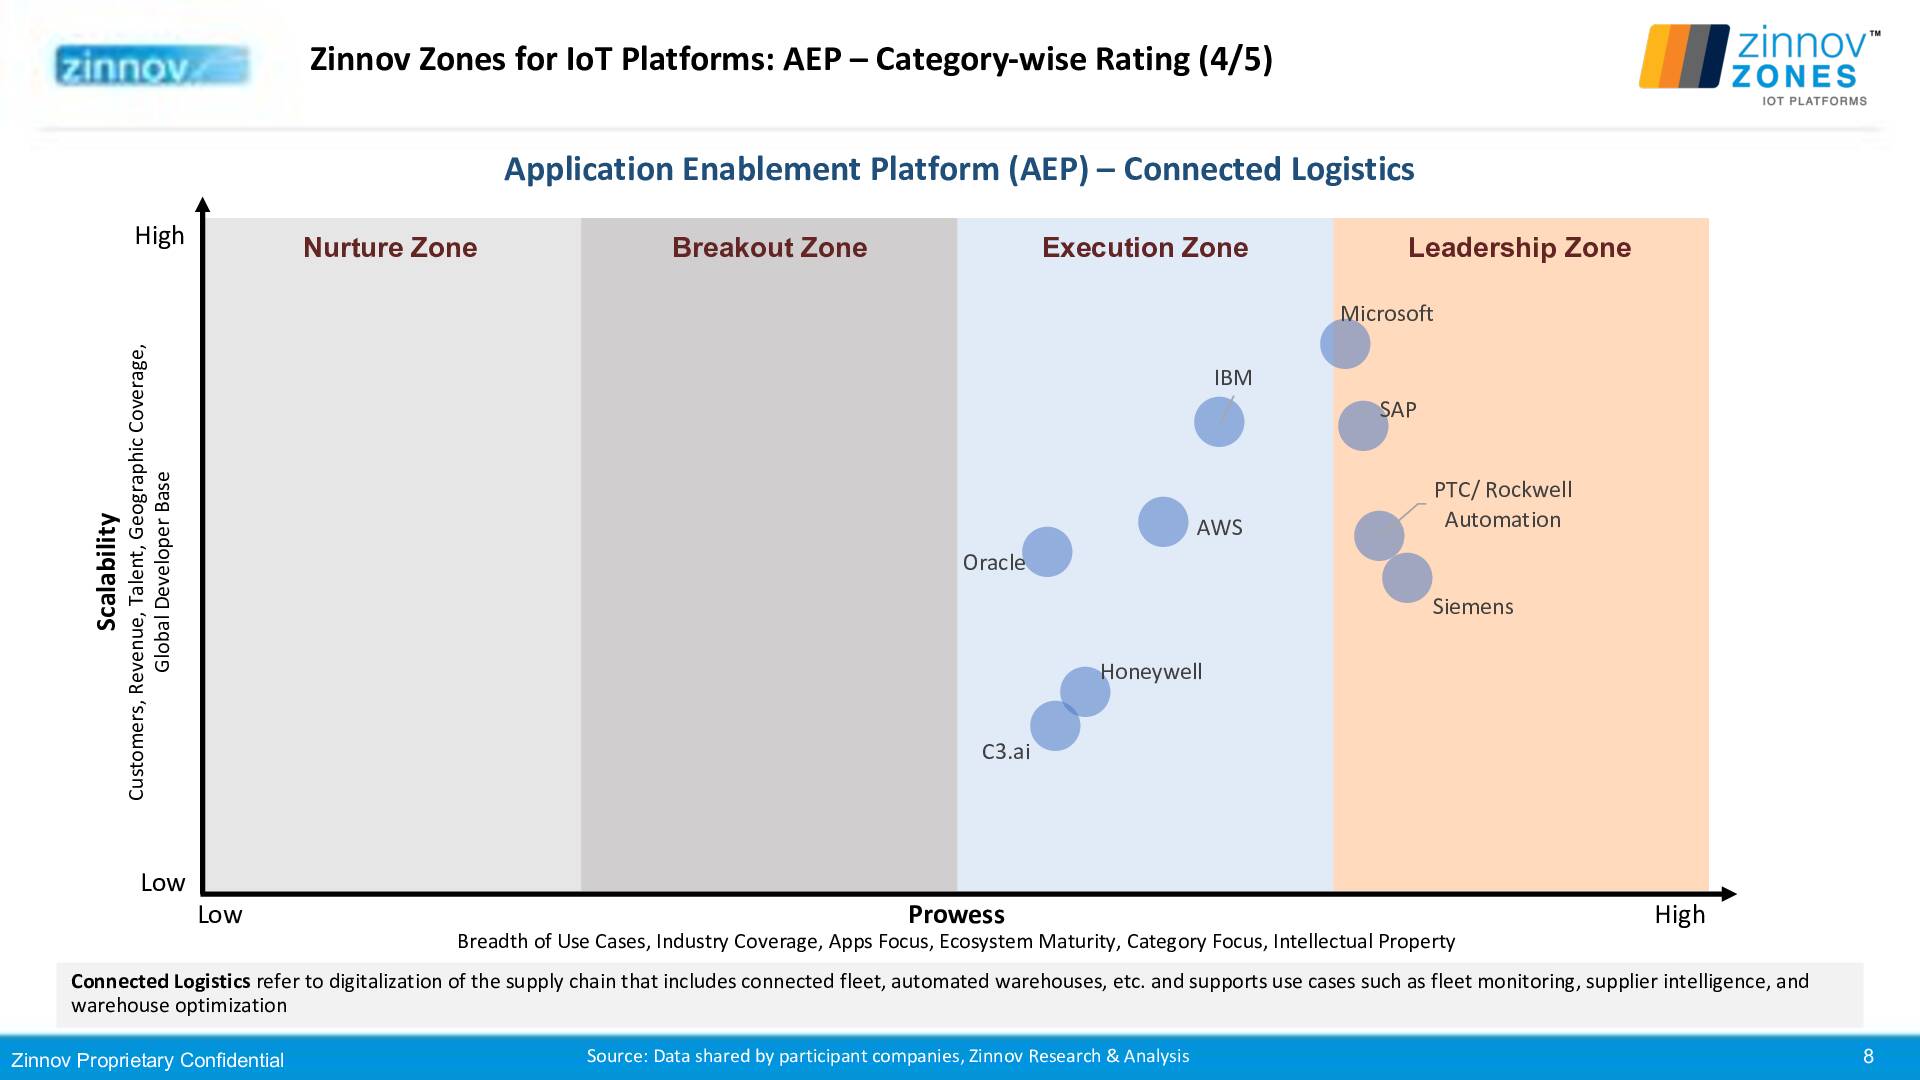 Zinnov Zones Iot Platform 2019 Ratings Revised 24sep20198